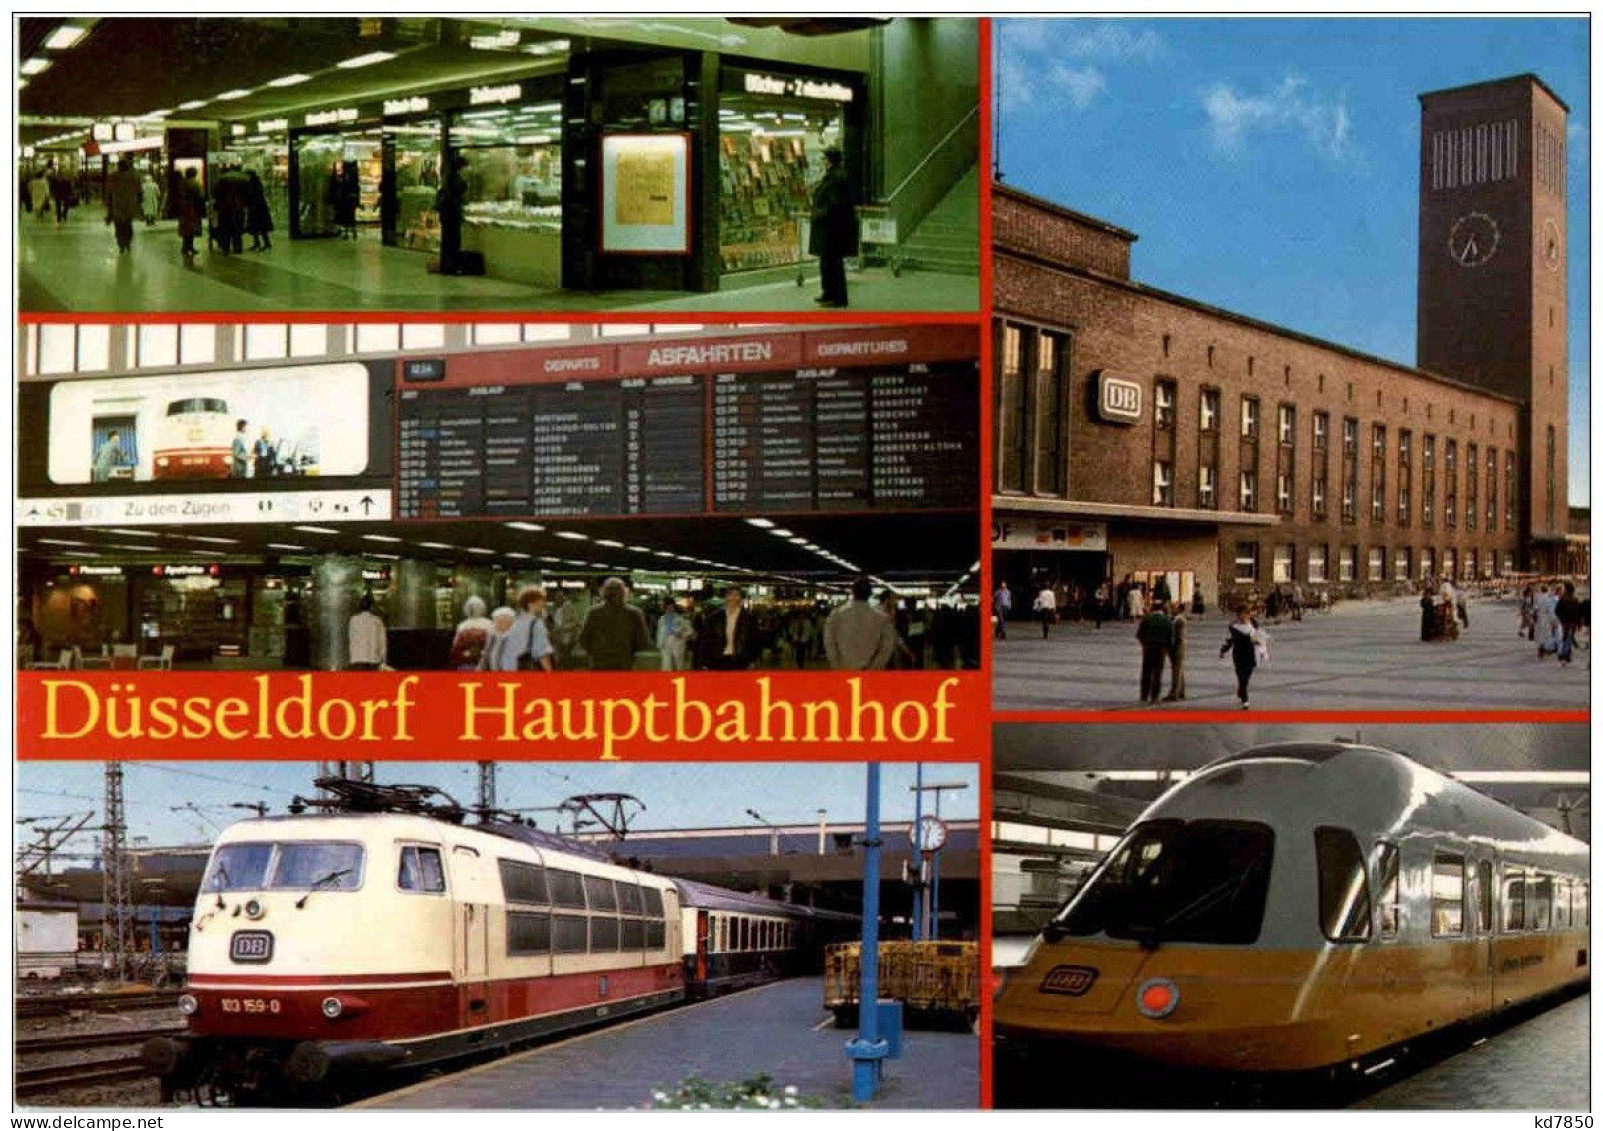 Düsseldorf Hauptbahnhof - Duesseldorf